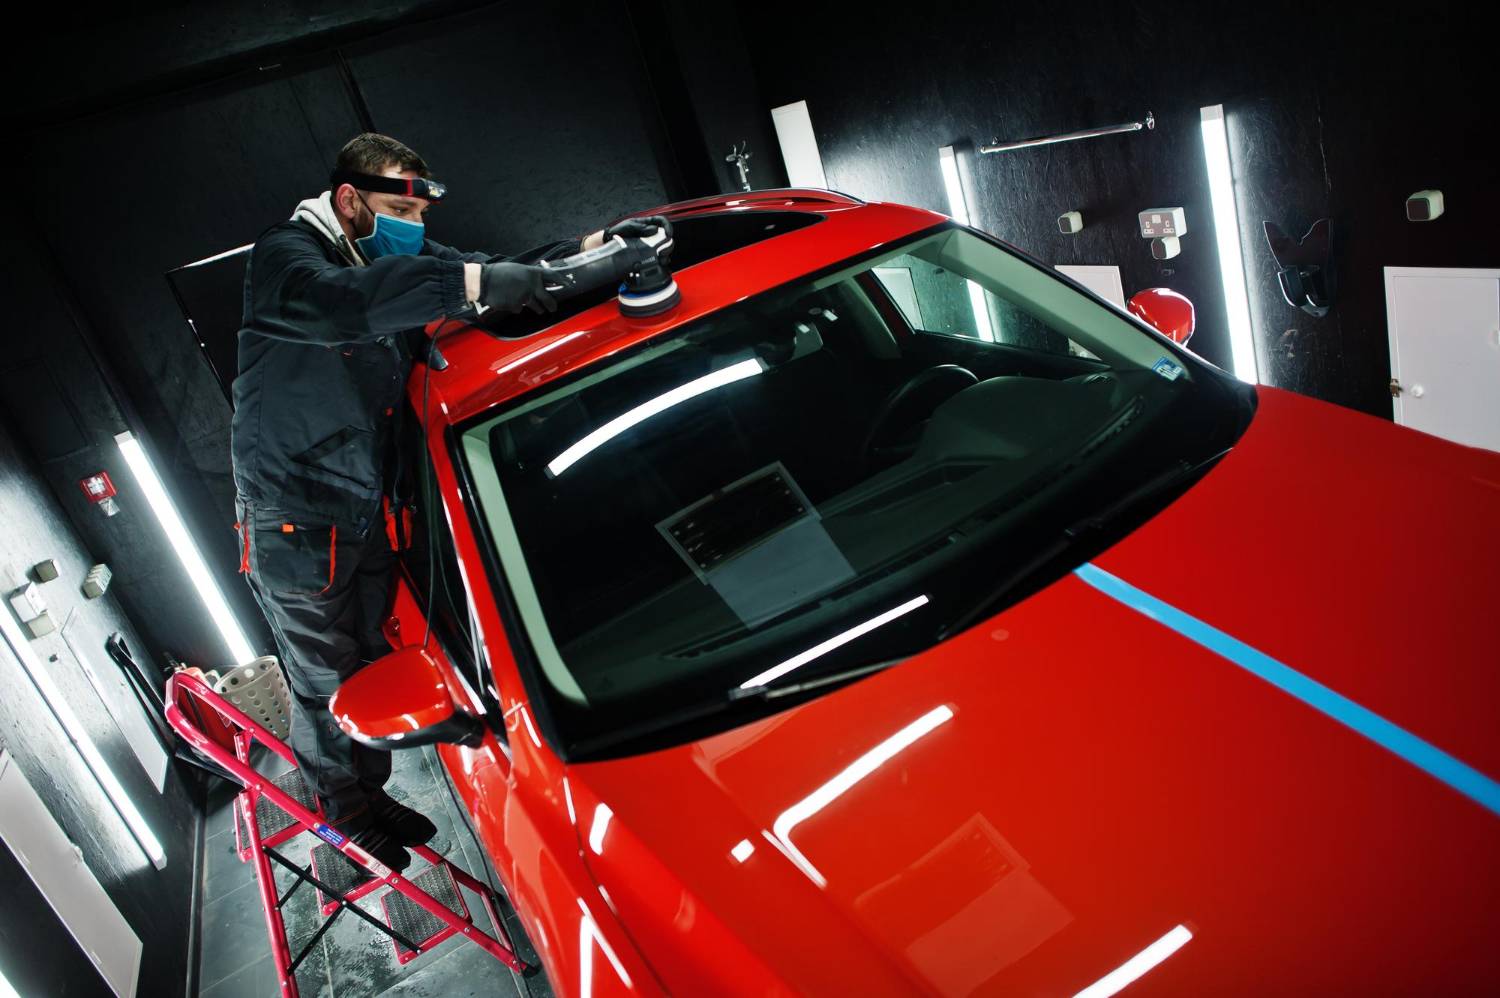 car-detailing-concept-man-face-mask-with-orbital-polisher-repair-shop-polishing-roof-orange-suv-car